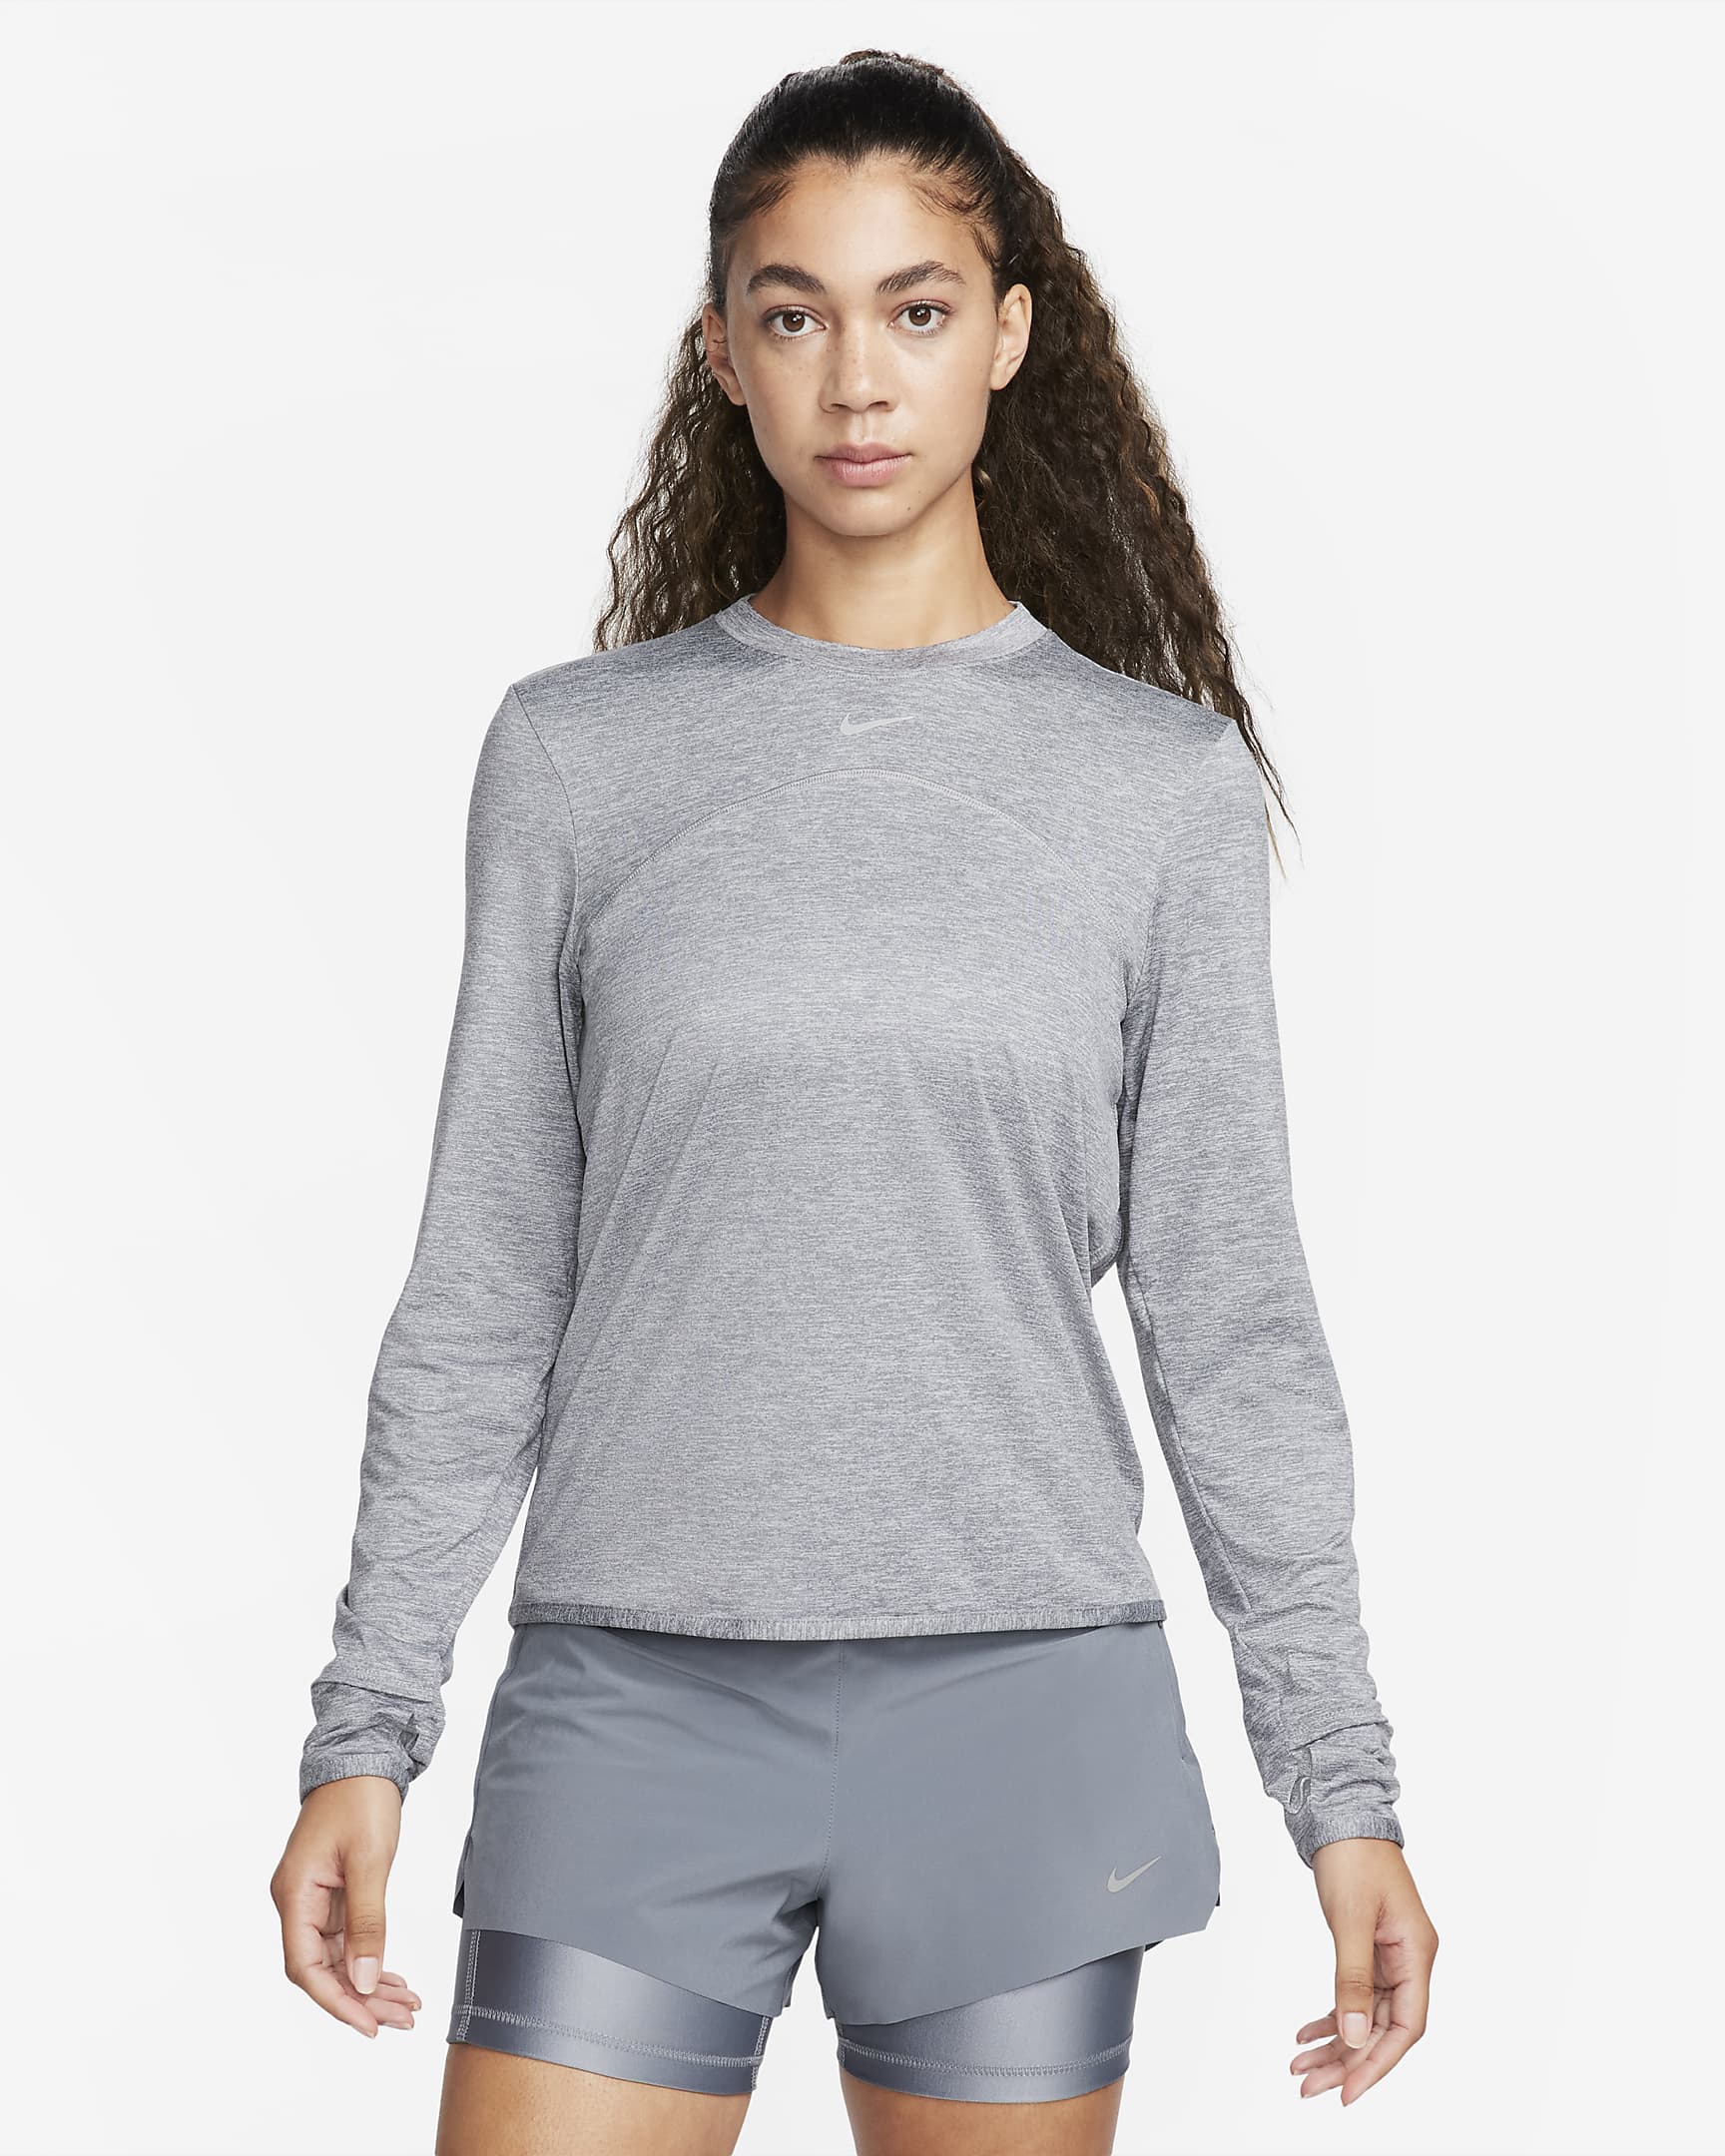 Nike Dri-FIT Swift UV Women's Crew-Neck Running Top - Smoke Grey/Light Smoke Grey/Heather